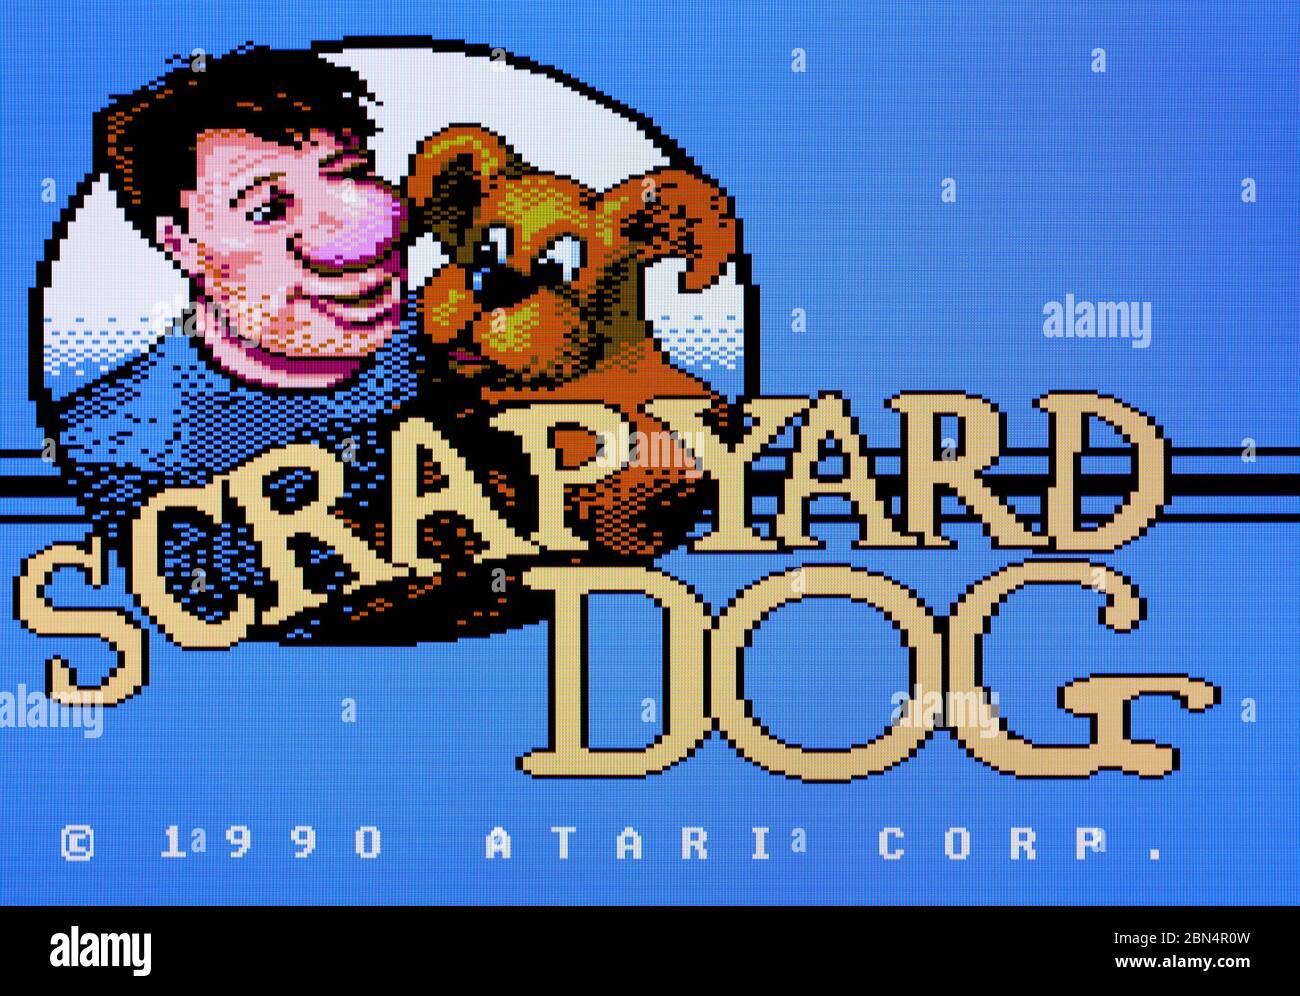 Scrapyard Dog - Atari 7800 Videgame Stock Photo